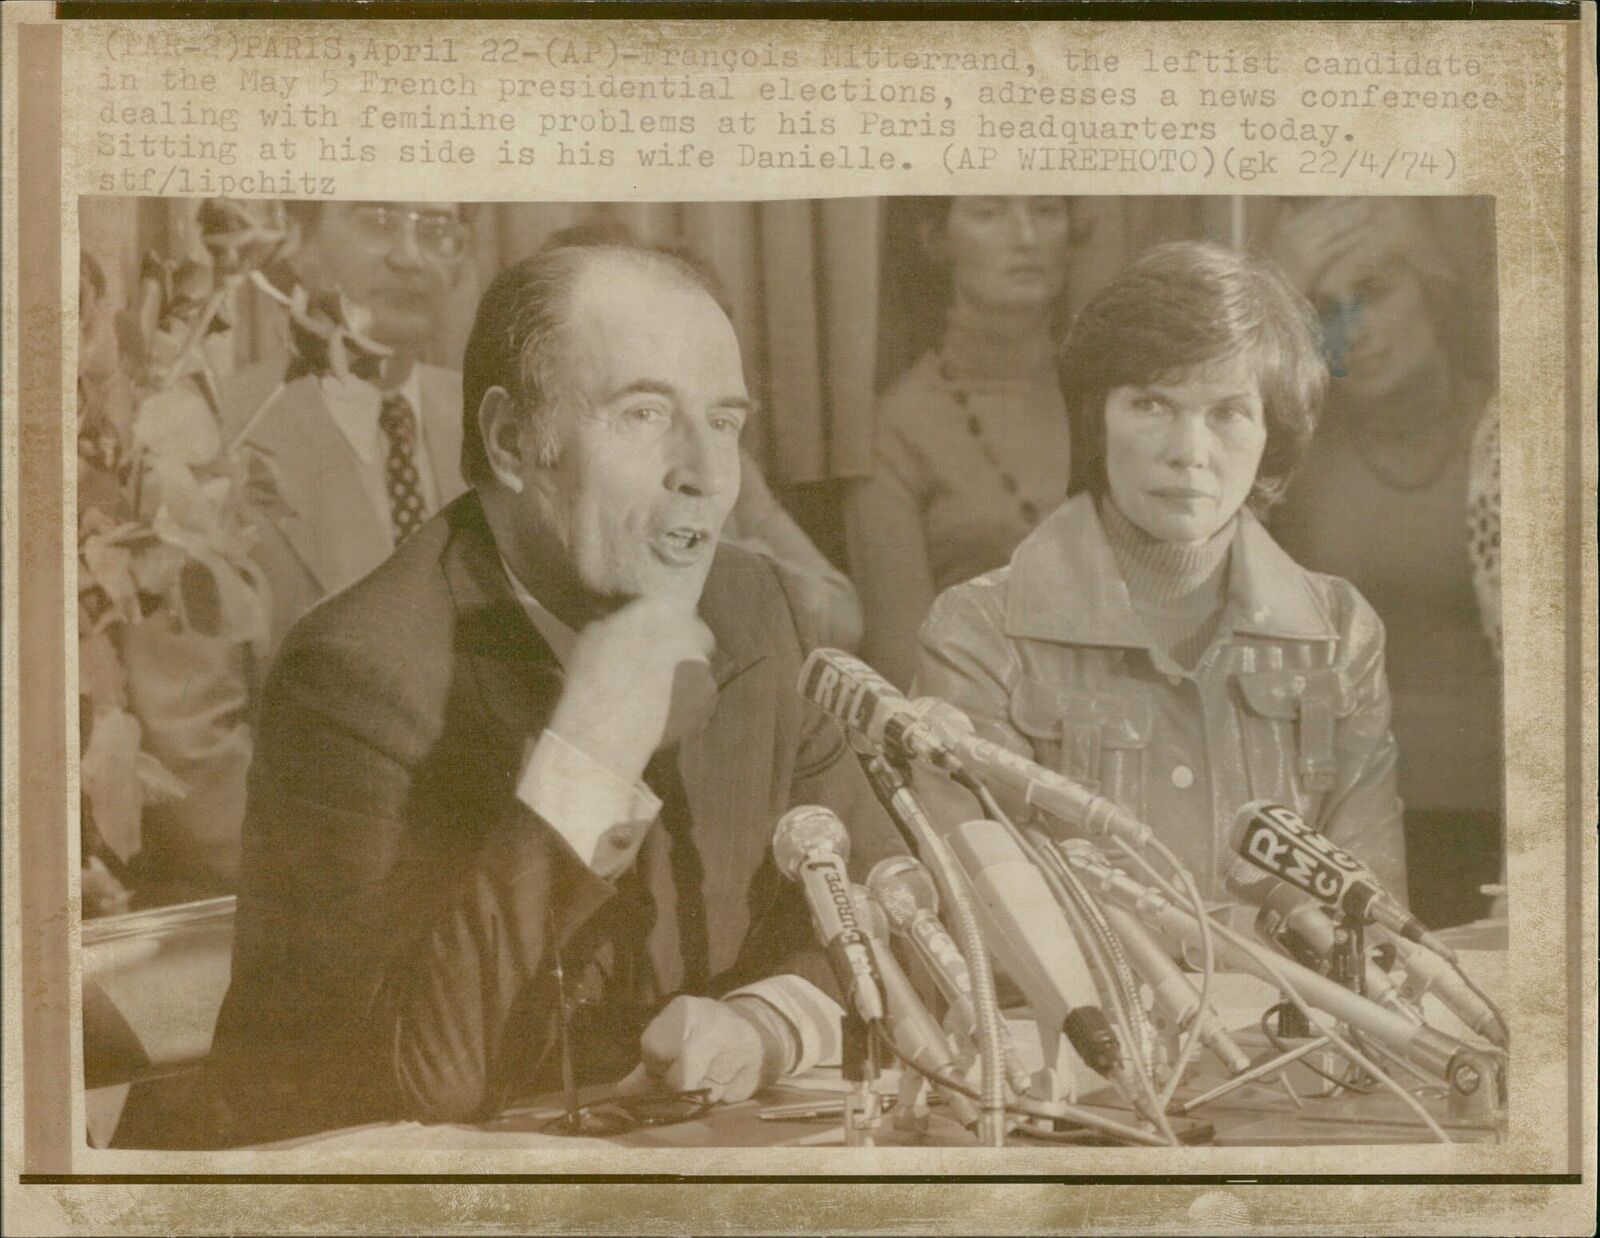 François Mitterrand addresses a news conference... - Vintage Photograph 1643302